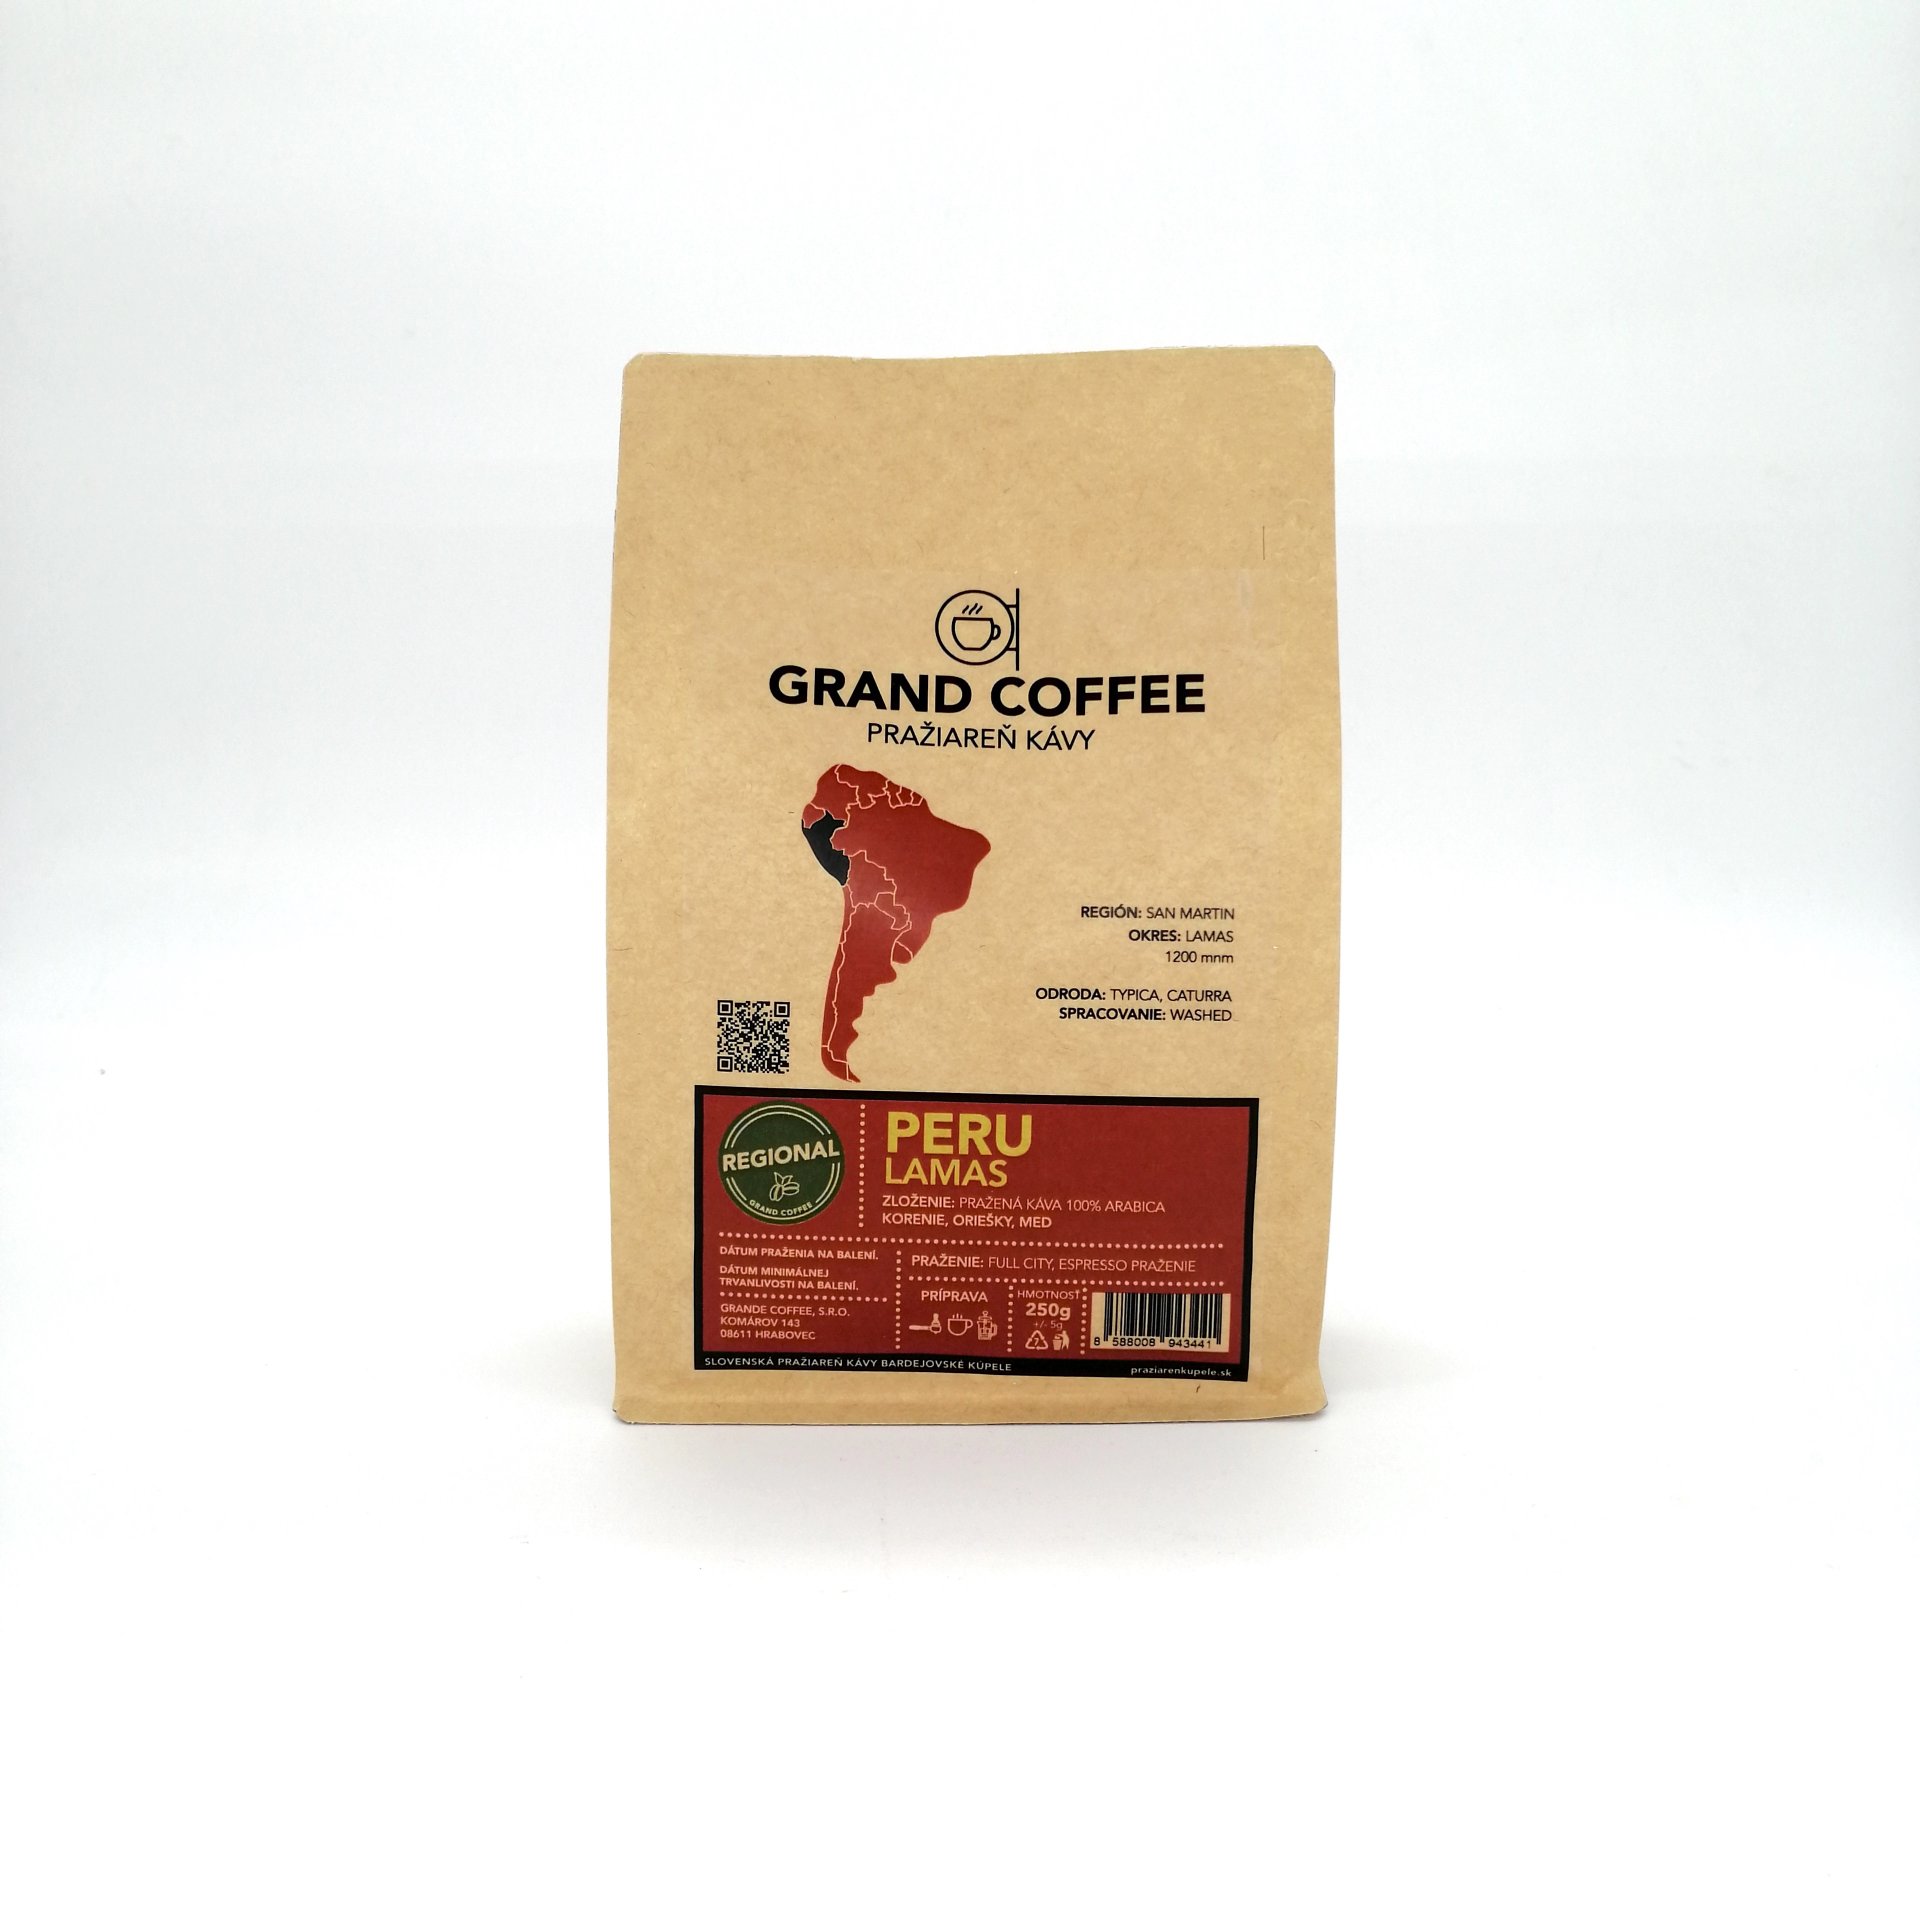 Grande Coffee Peru Lamas 250g